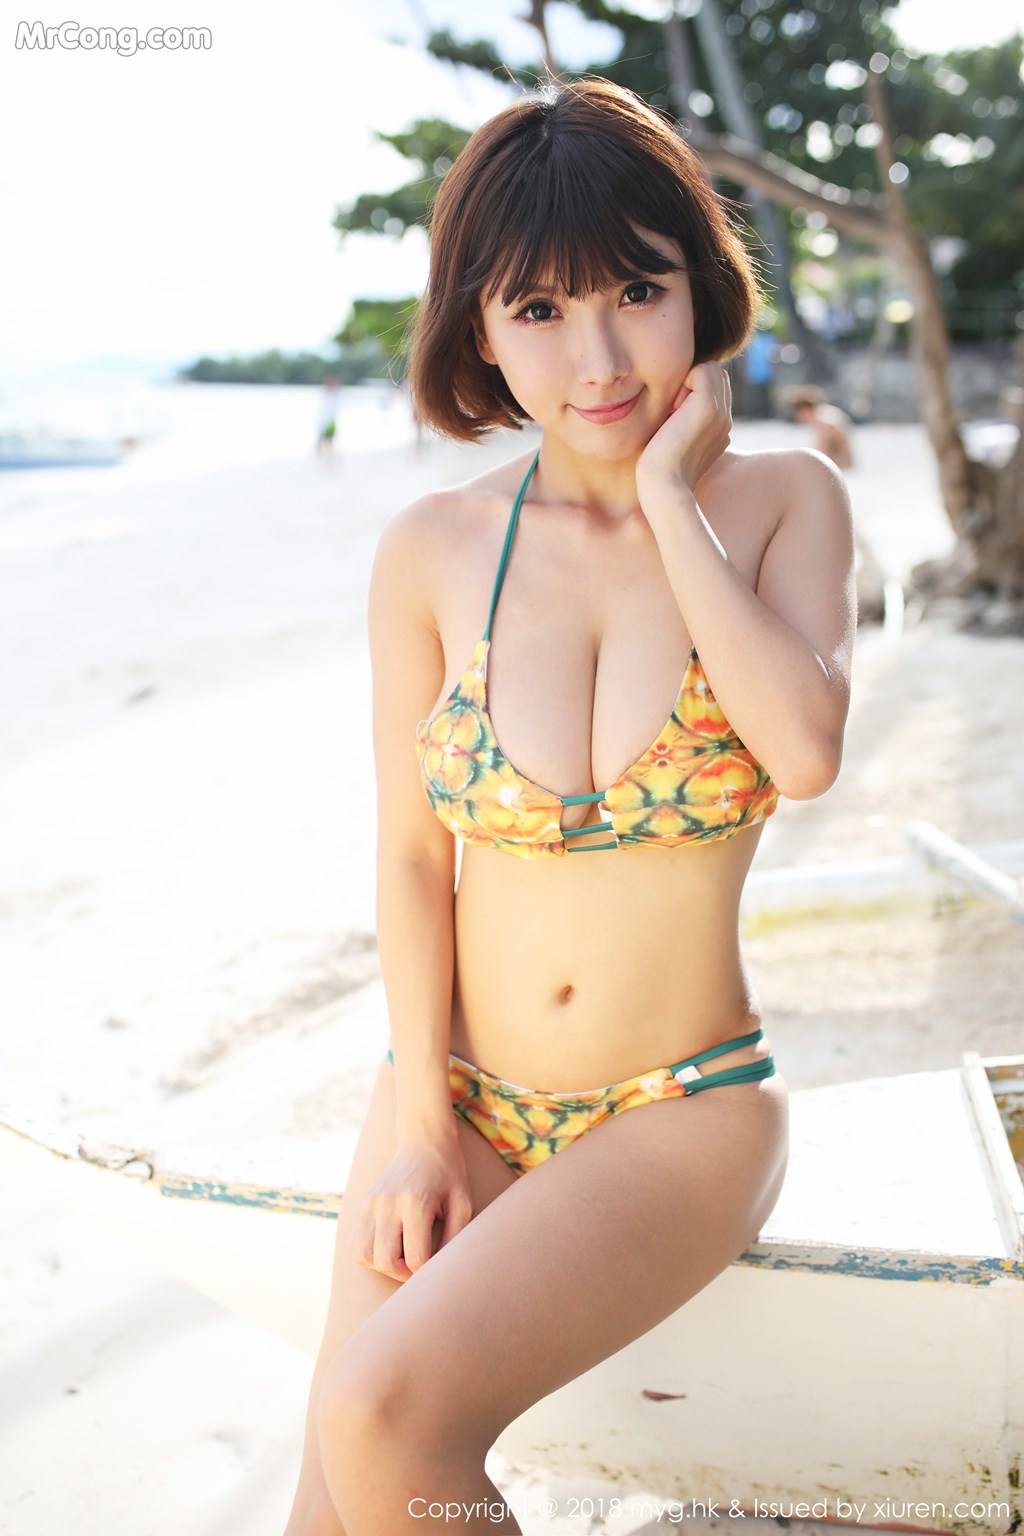 MyGirl Vol.283: Sunny Model (晓 茜) (51 photos)